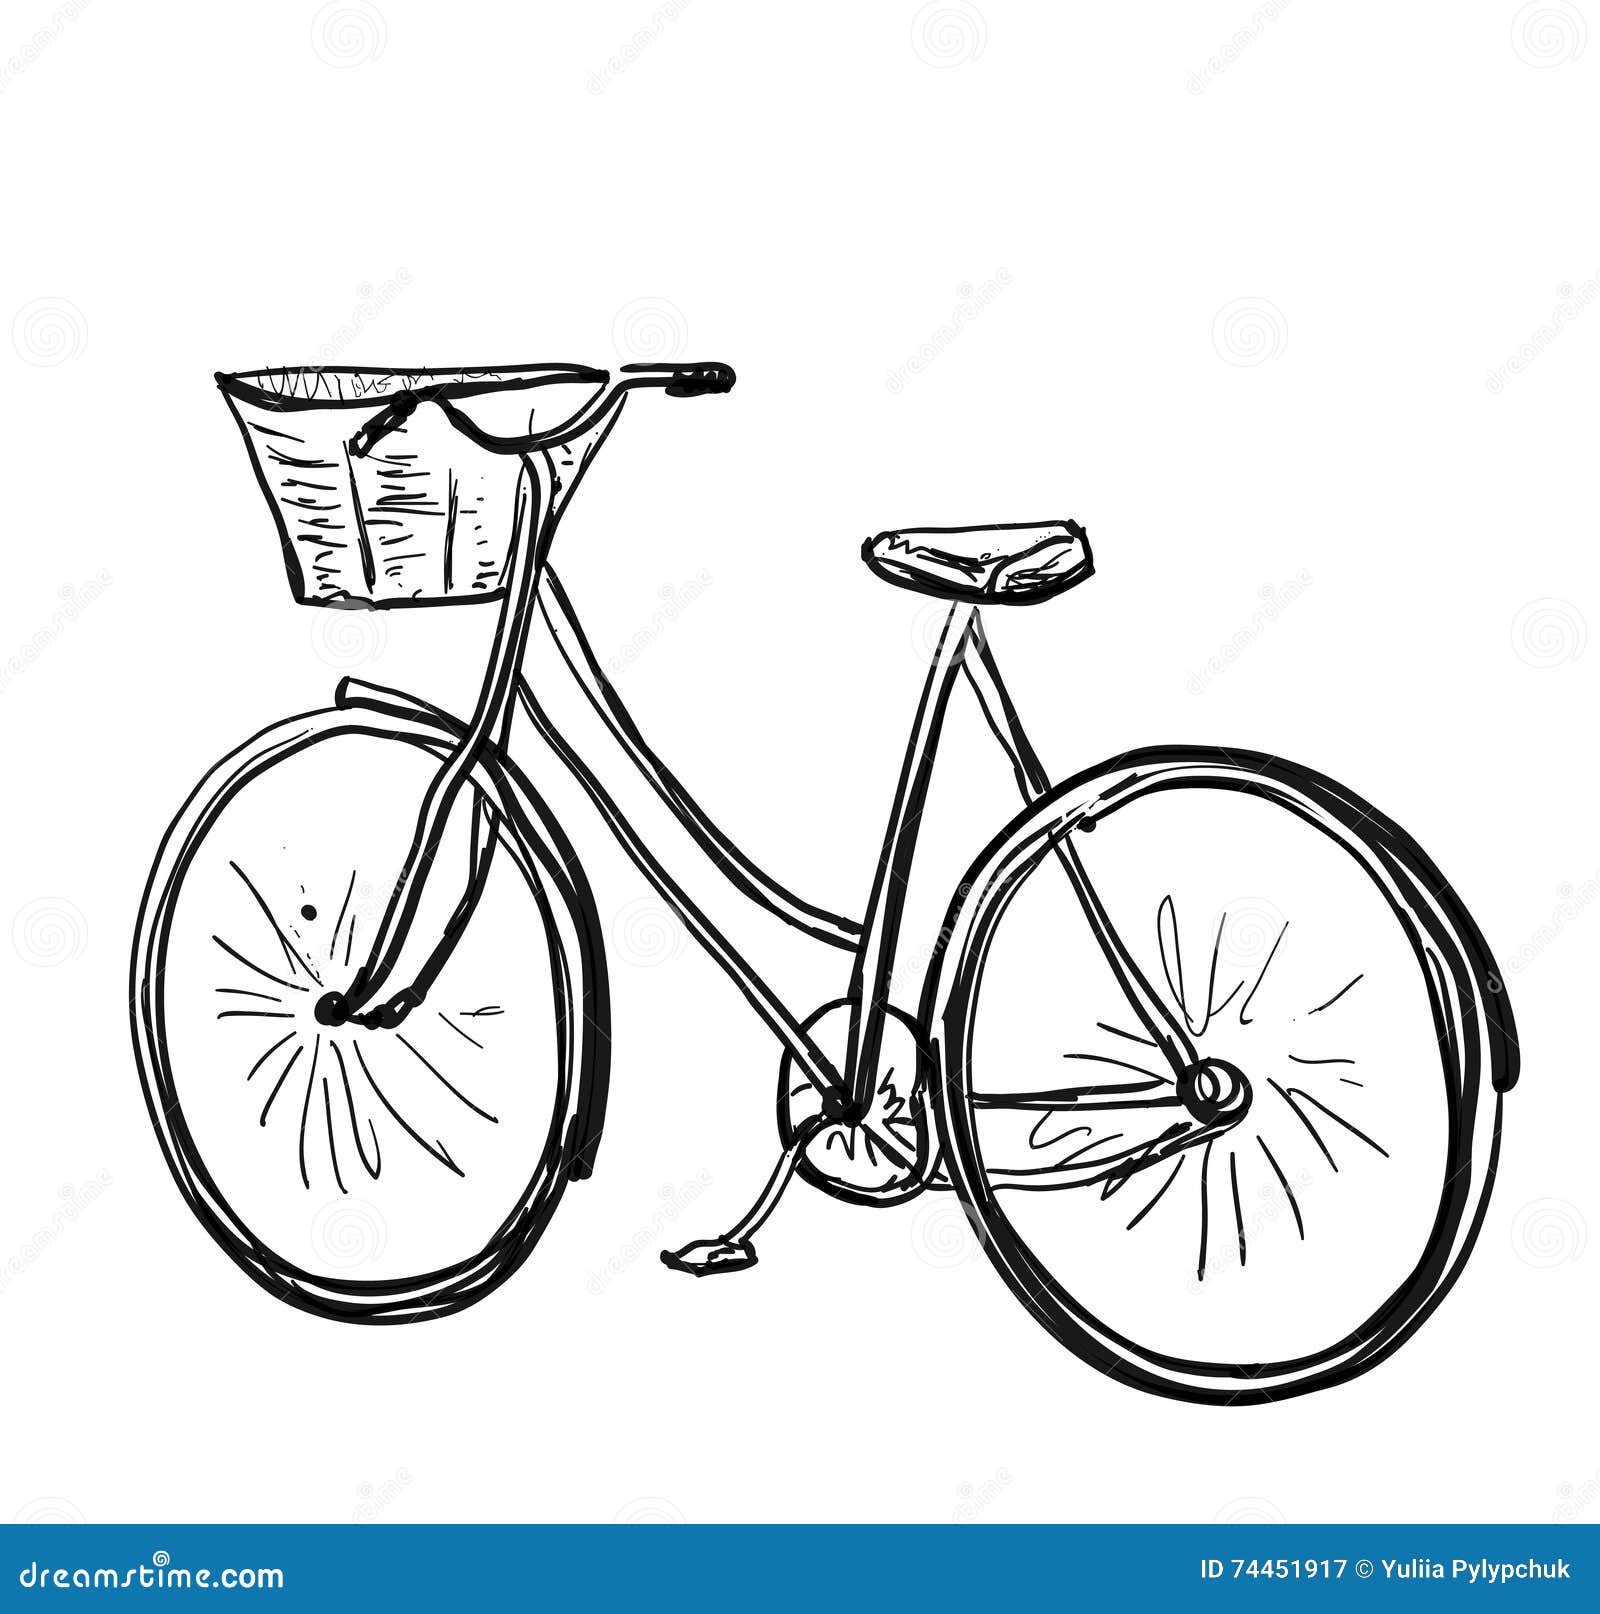 Cartoon Illustration of Bicycle Stock Vector - Illustration of drawn,  sport: 74451917